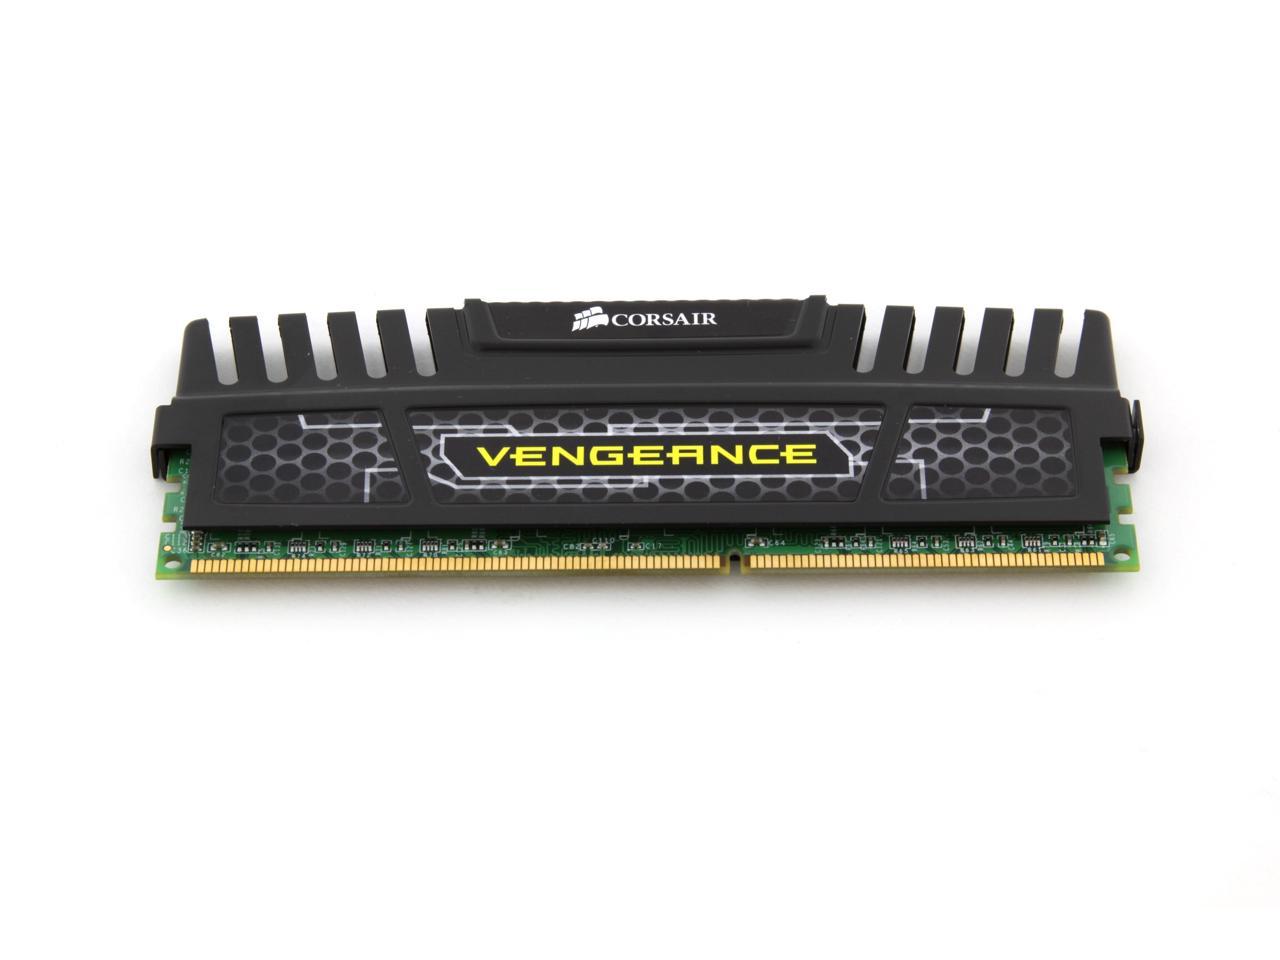 CORSAIR Vengeance 8GB 240-Pin PC RAM DDR3 1600 (PC3 12800) Desktop Memory  Model CMZ8GX3M1A1600C10